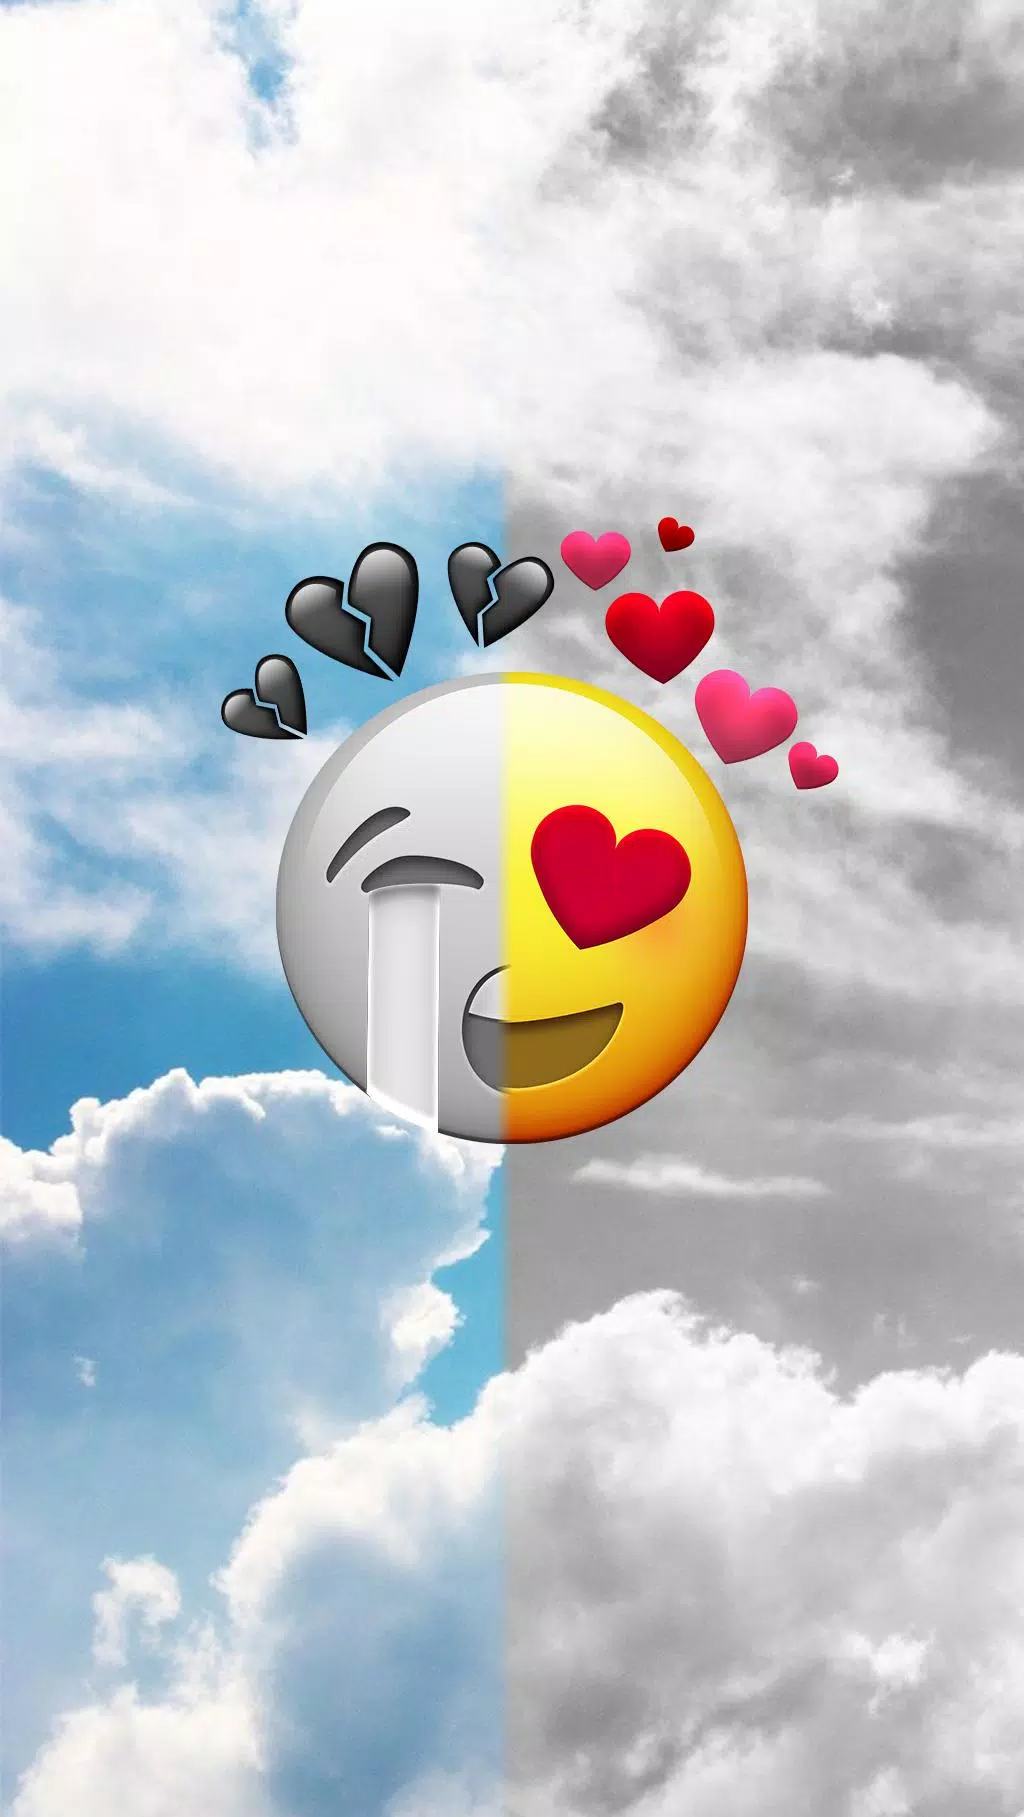 emoji wallpaper APK for Android Download